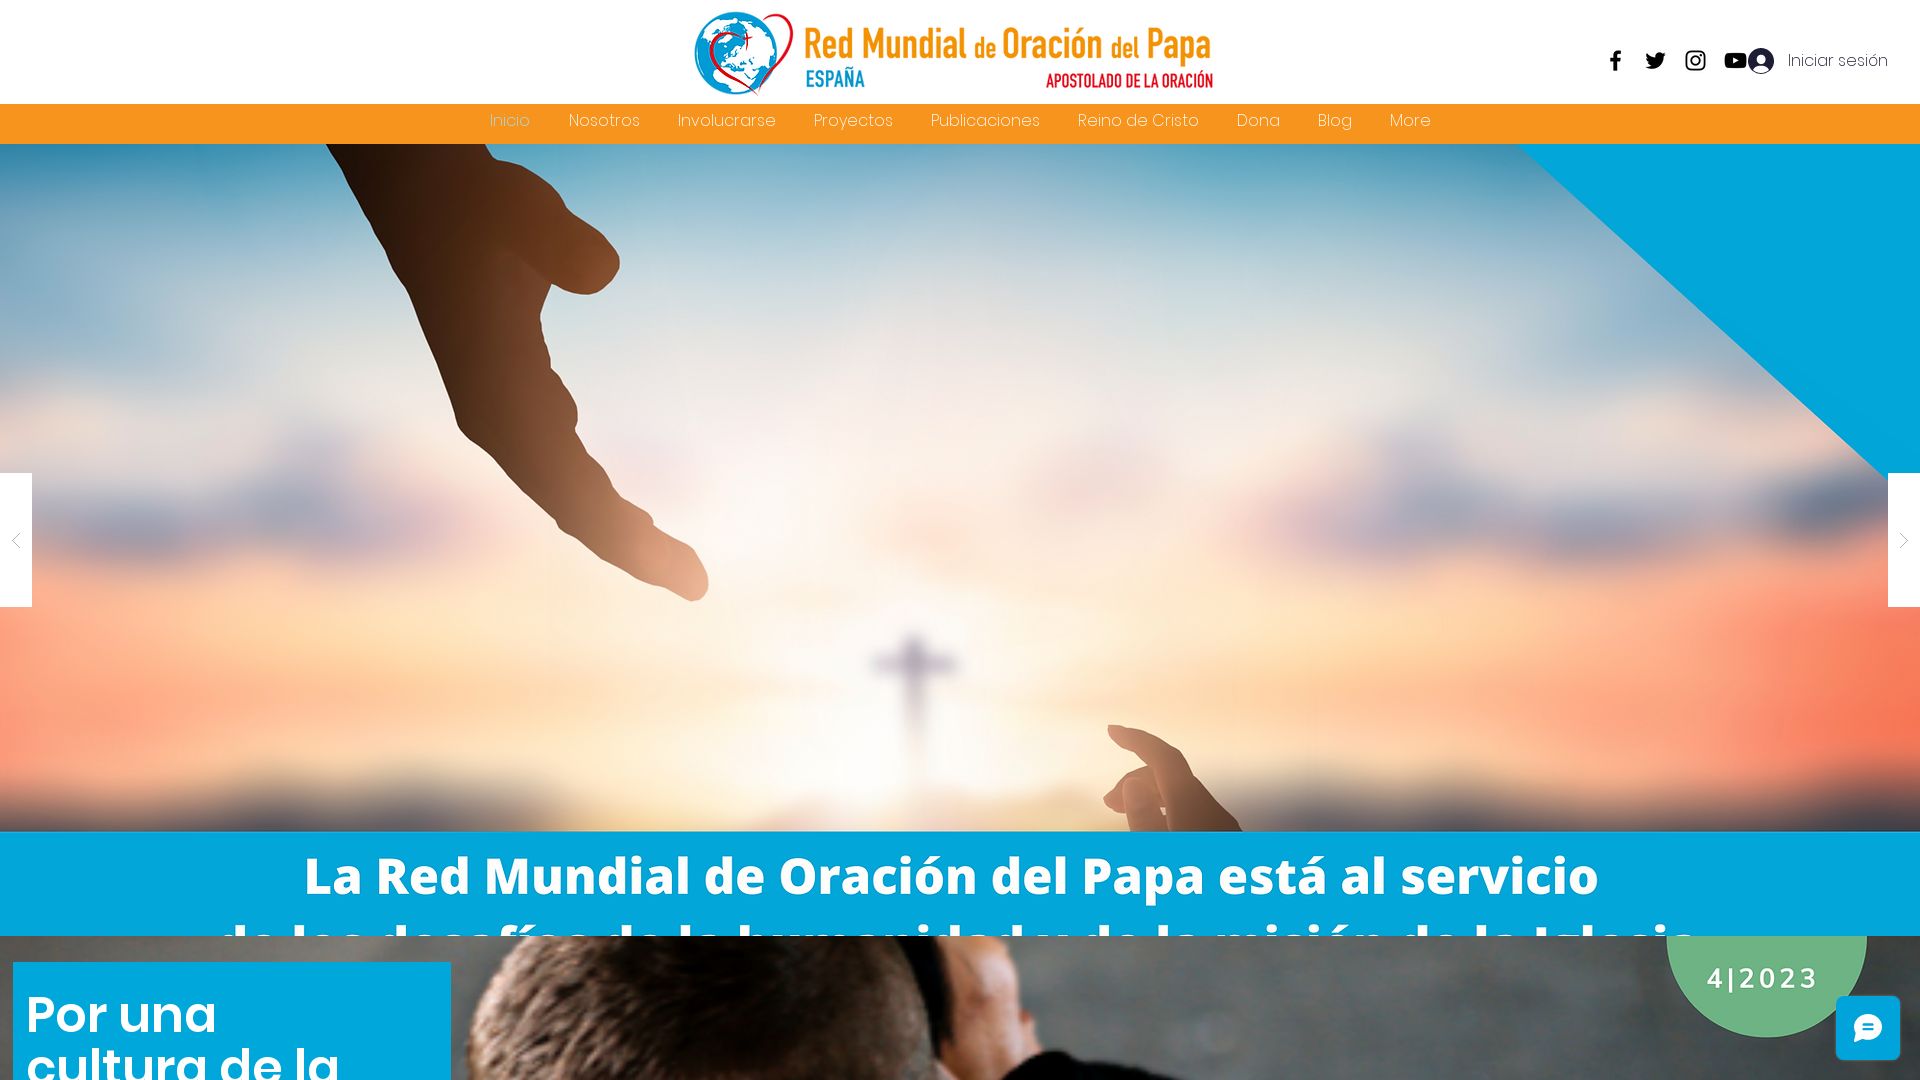 Status do site redoraciondelpapa.es está   ONLINE